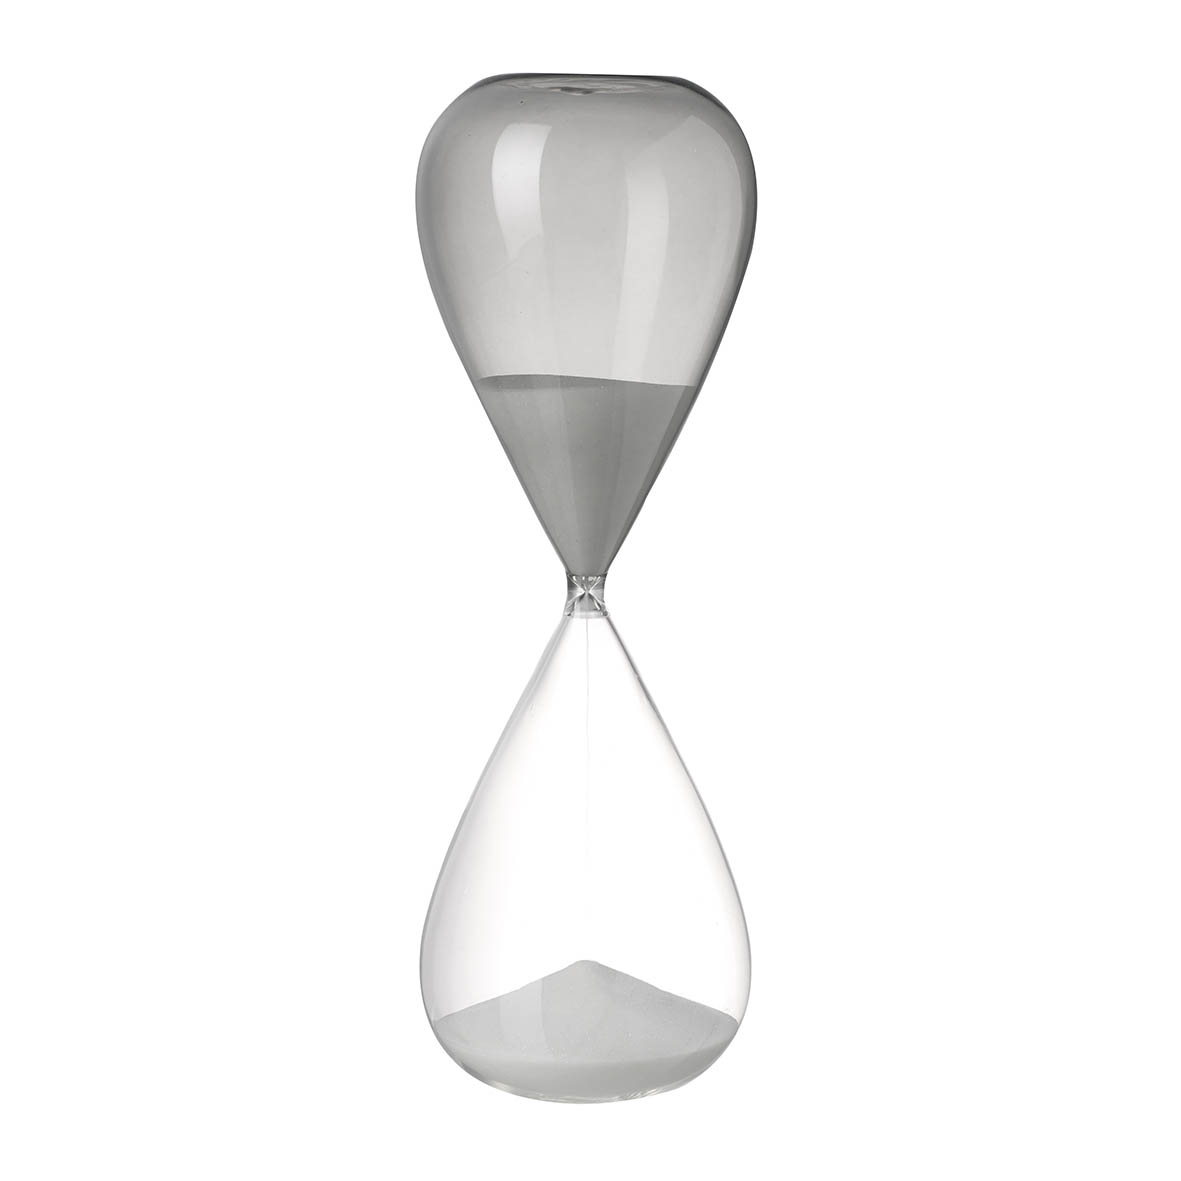 Sand timer 11,5x11,5x35,5cm TONES grey/white glass